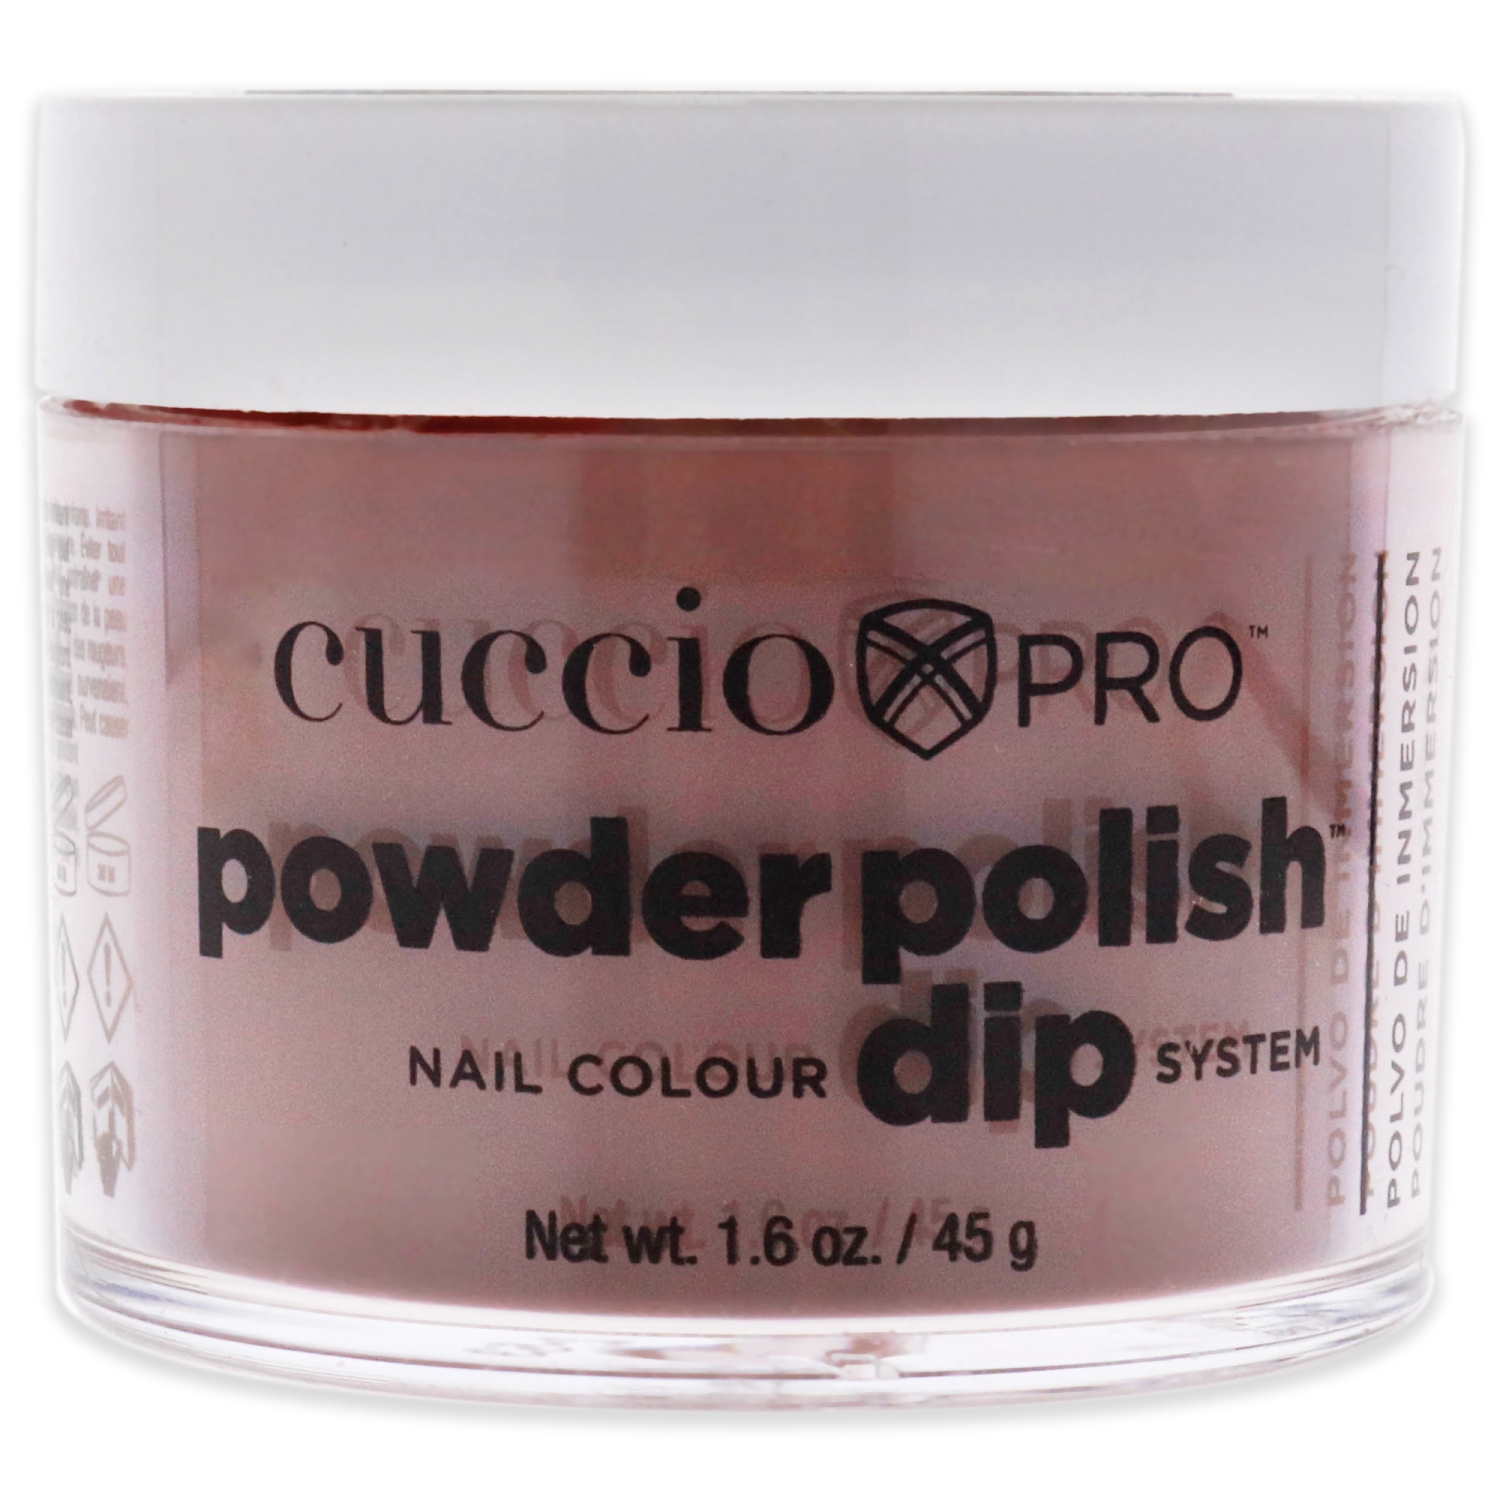 Pro Powder Polish Nail Colour Dip System - Smore Please by Cuccio for Women - 1.6 oz Nail Powder